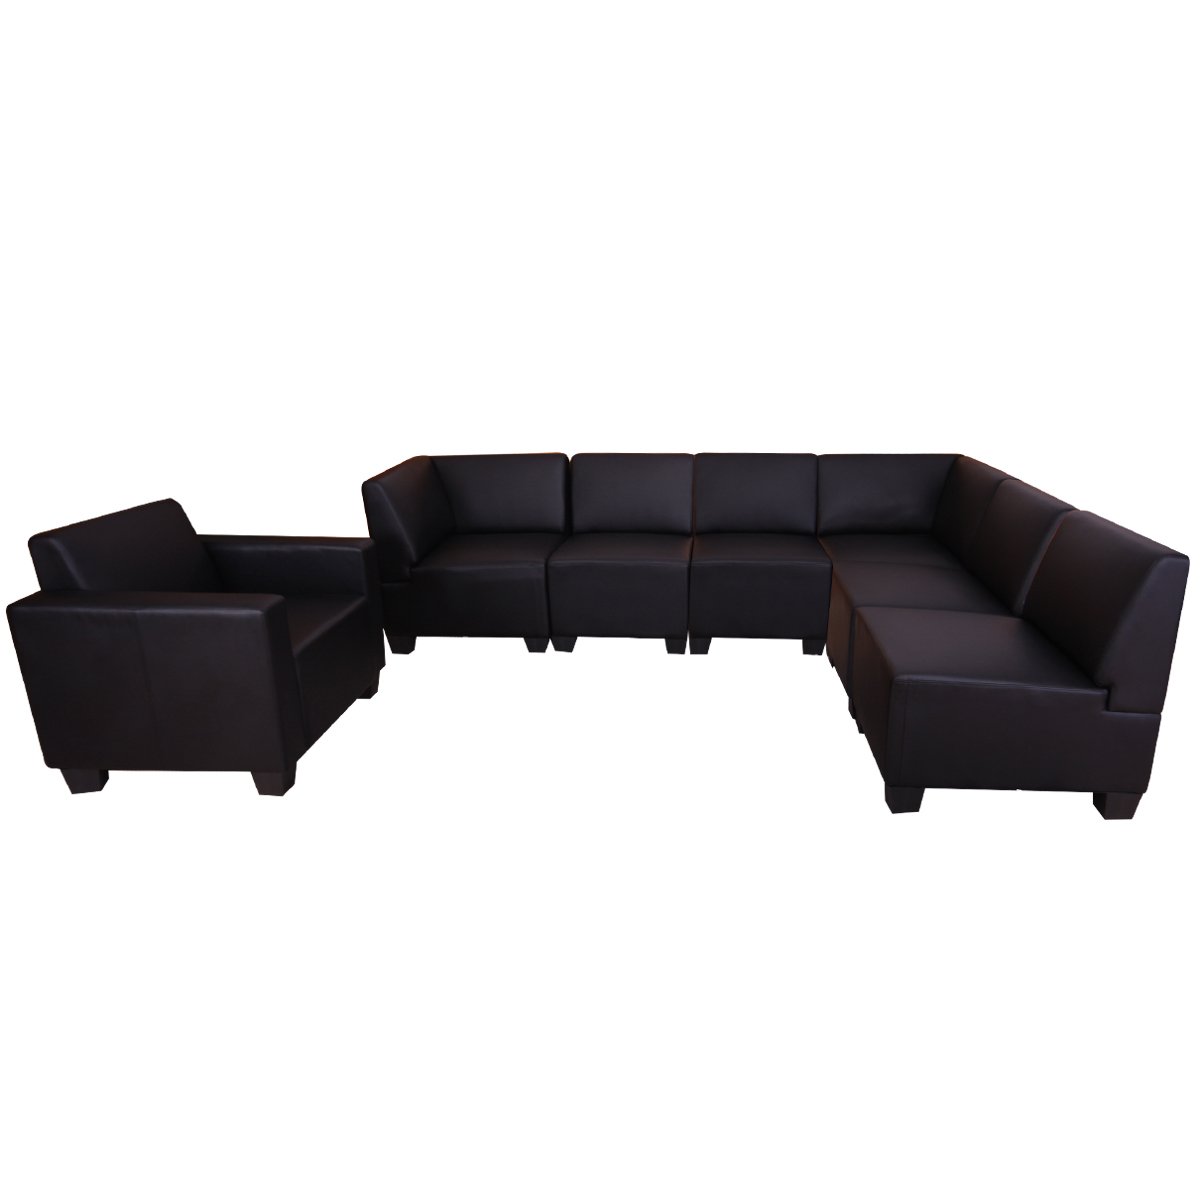 Sofa Modular LYON en 6 piezas + 1 Sillón, Gran acolchado, tapizado en Piel sintetica Negro